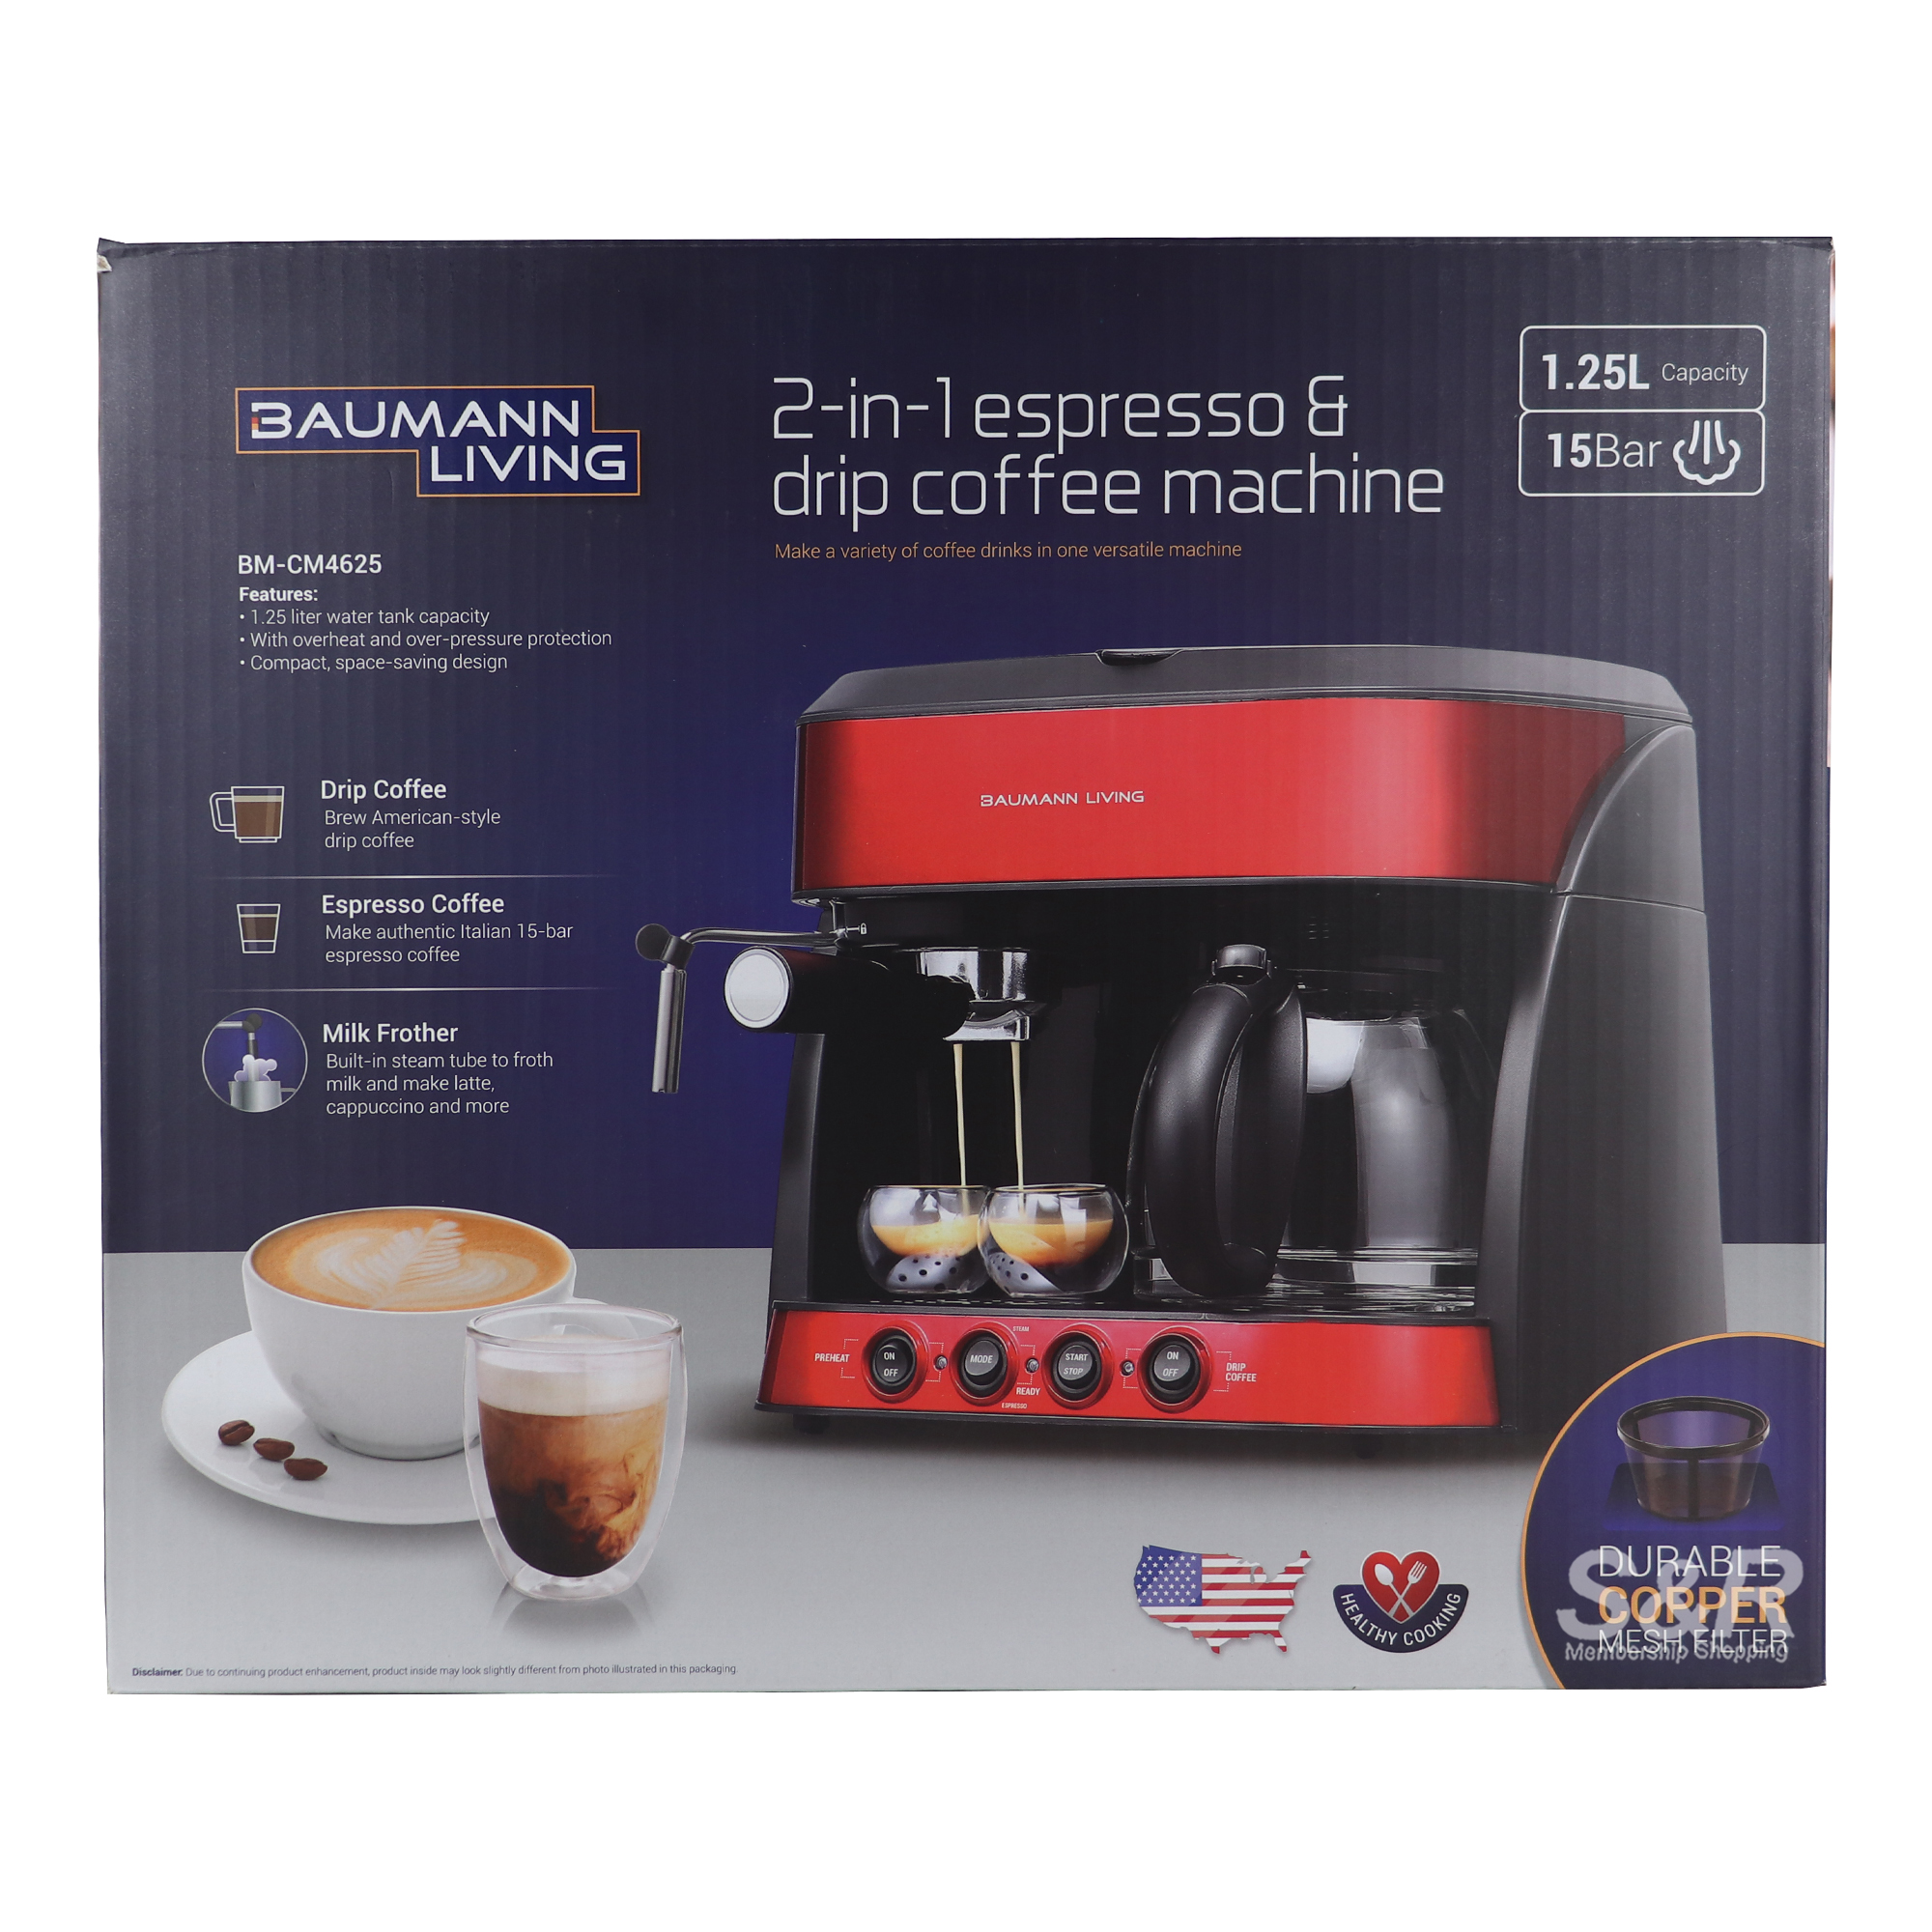 Baumann living 2-in-1 Espresso and Drip Coffee Machine BM-CM4625